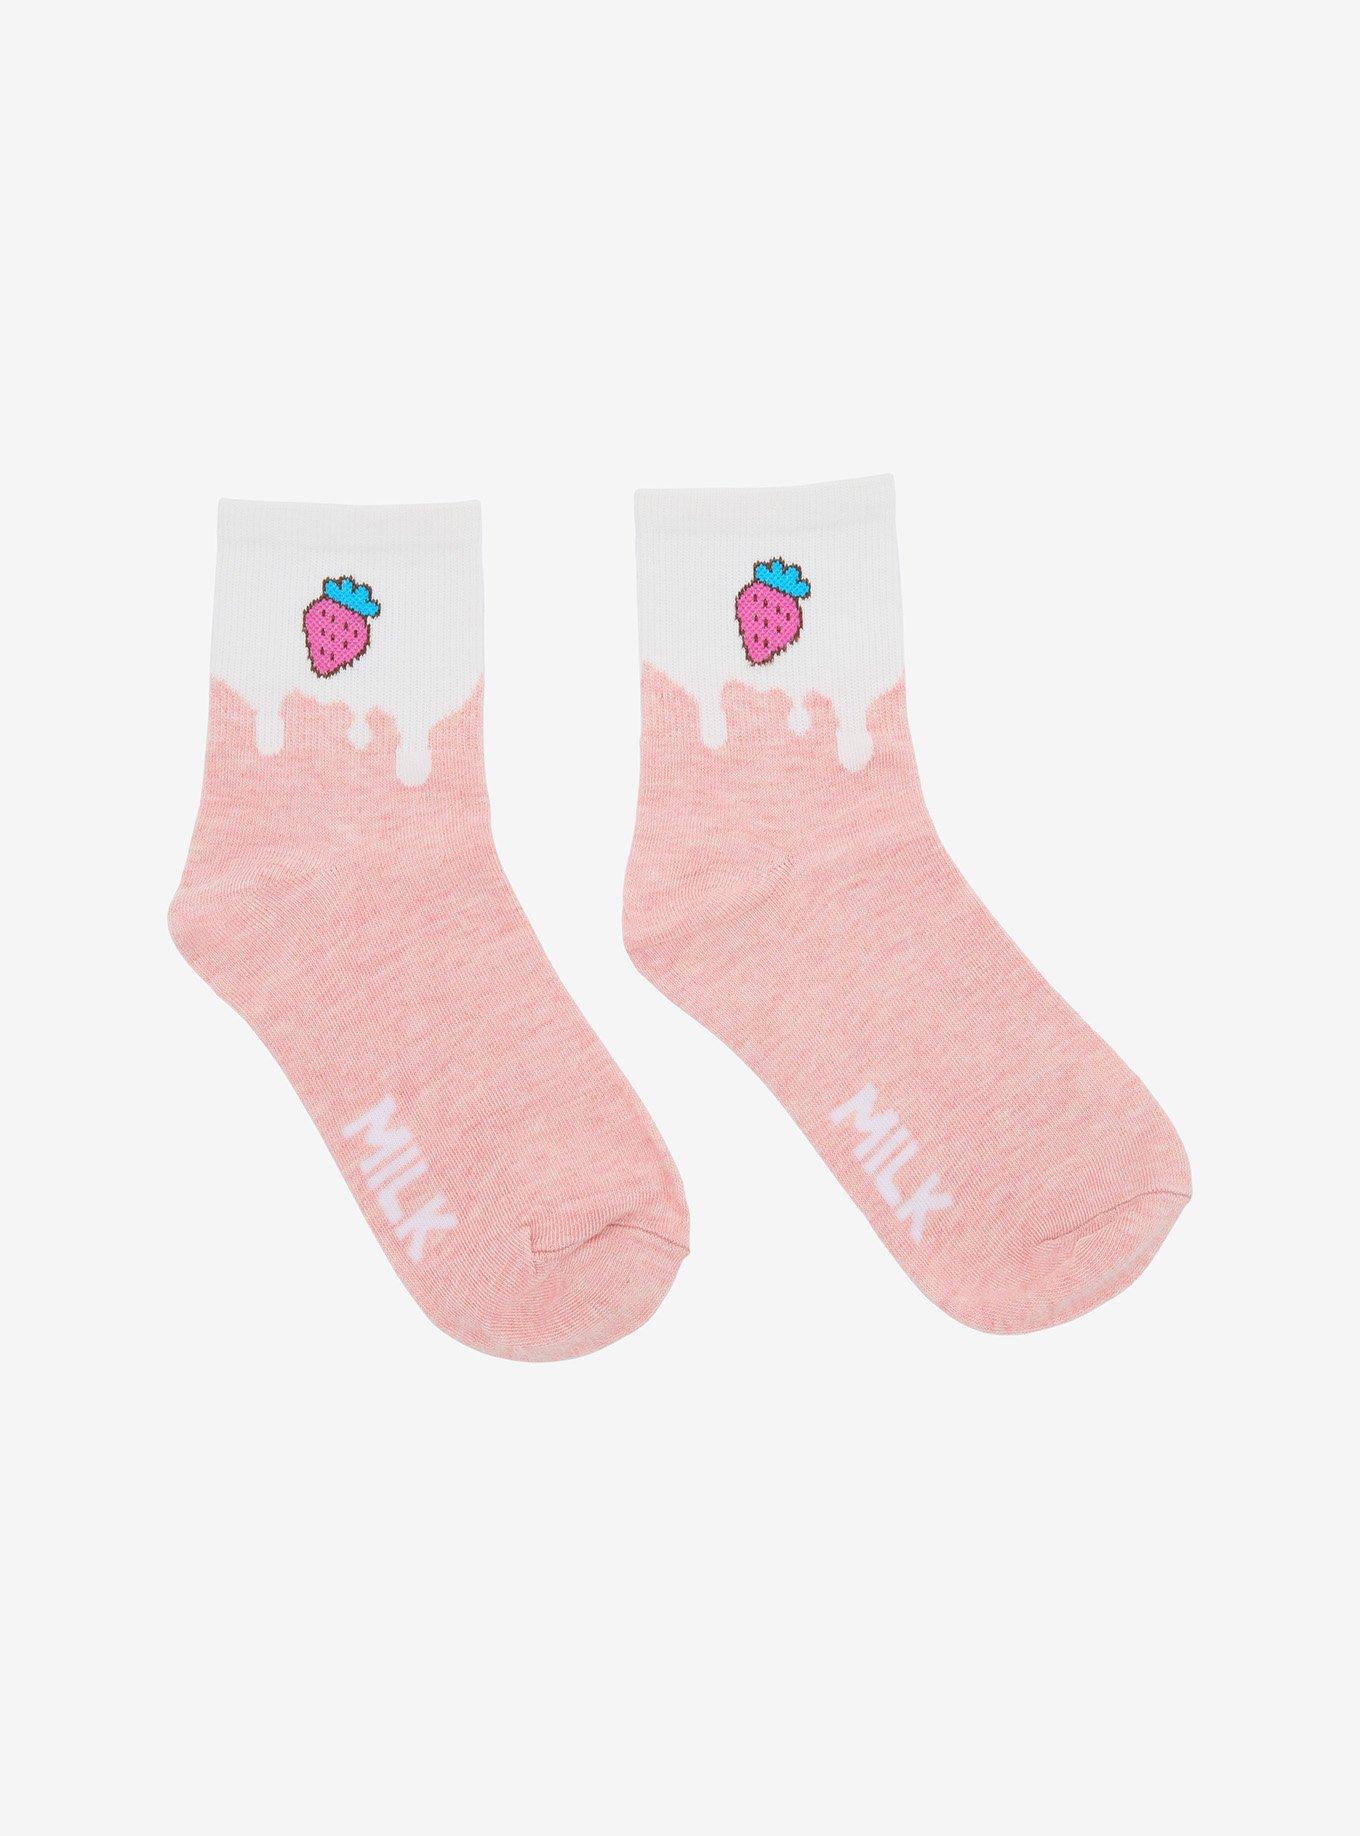 Strawberry Milk Drip Ankle Socks, , hi-res